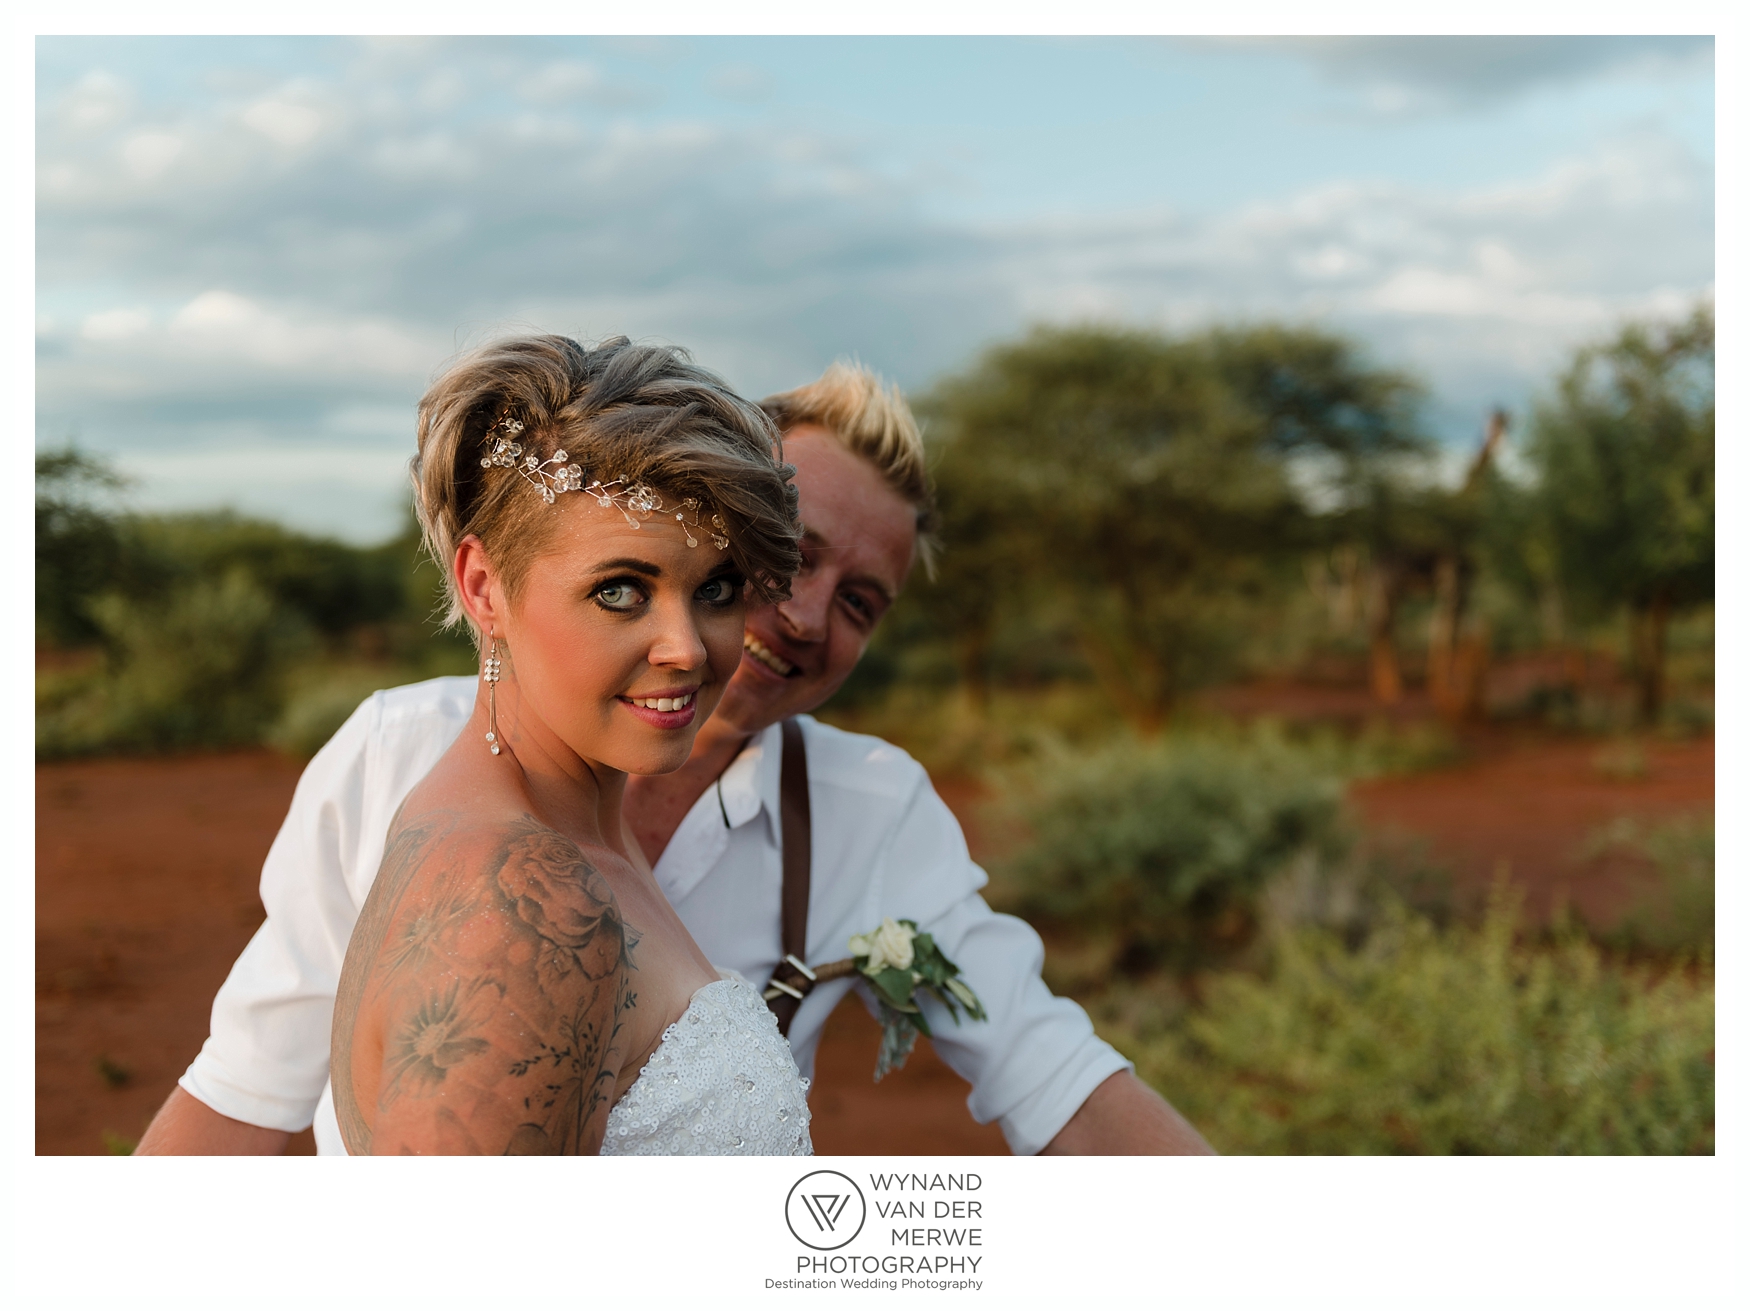 WynandvanderMerwe_weddingphotography_bushveldwedding_northam_bushveld_limpopowedding_limpopo_southafrica-274.jpg